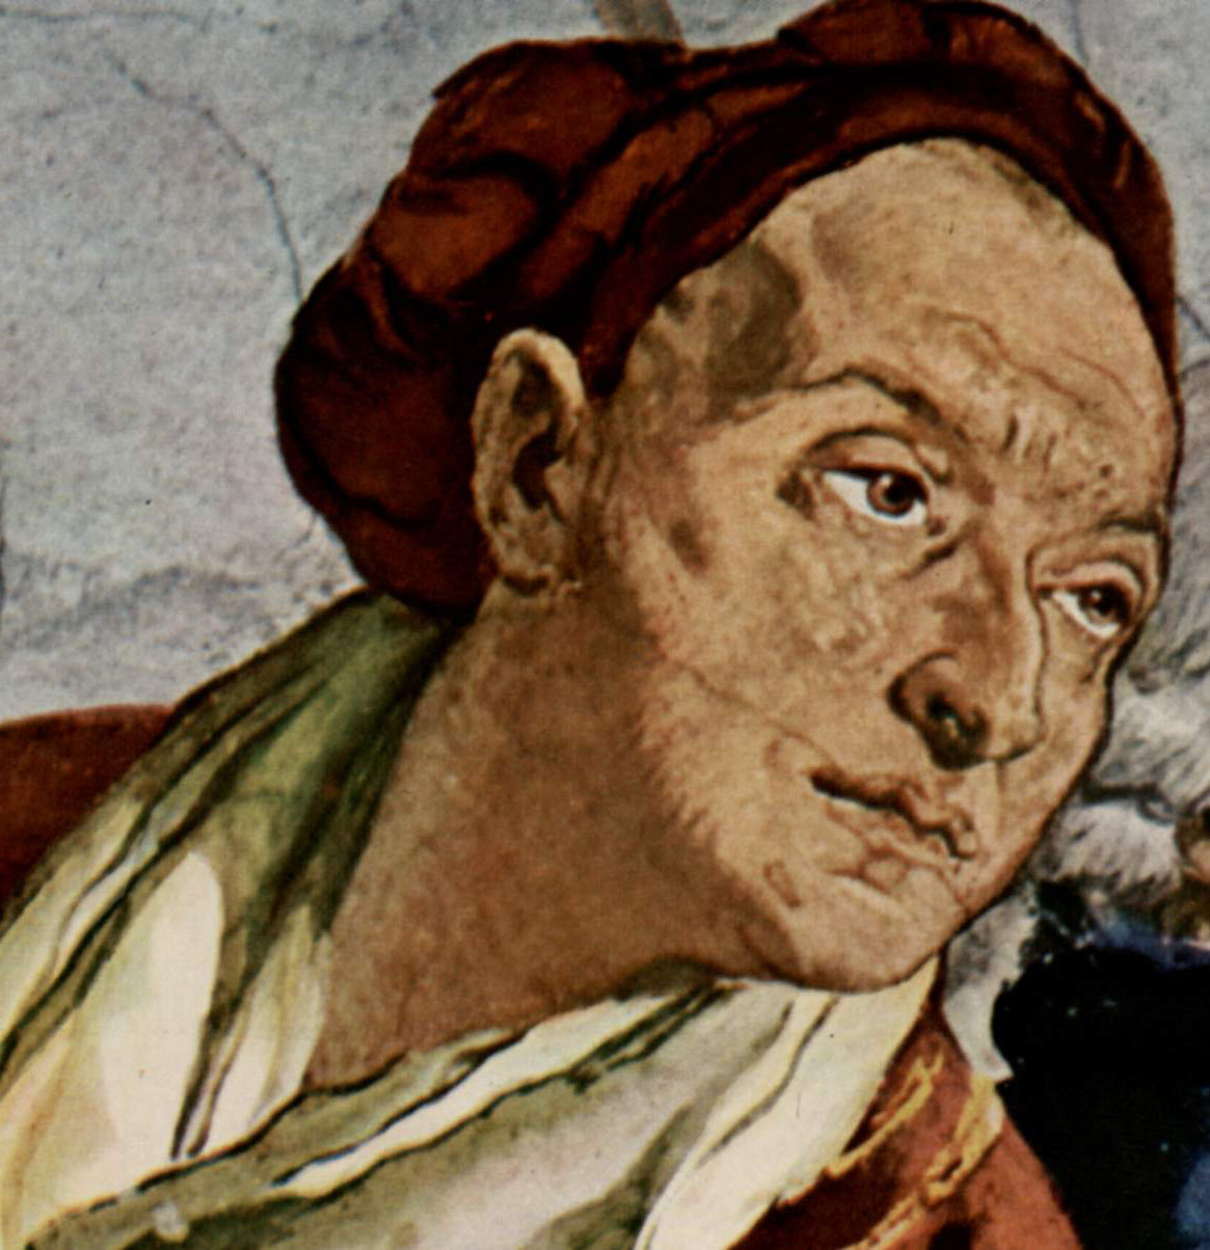 Giovanni Battista Tiepolo - mars 5, 1696 - mars 27, 1770